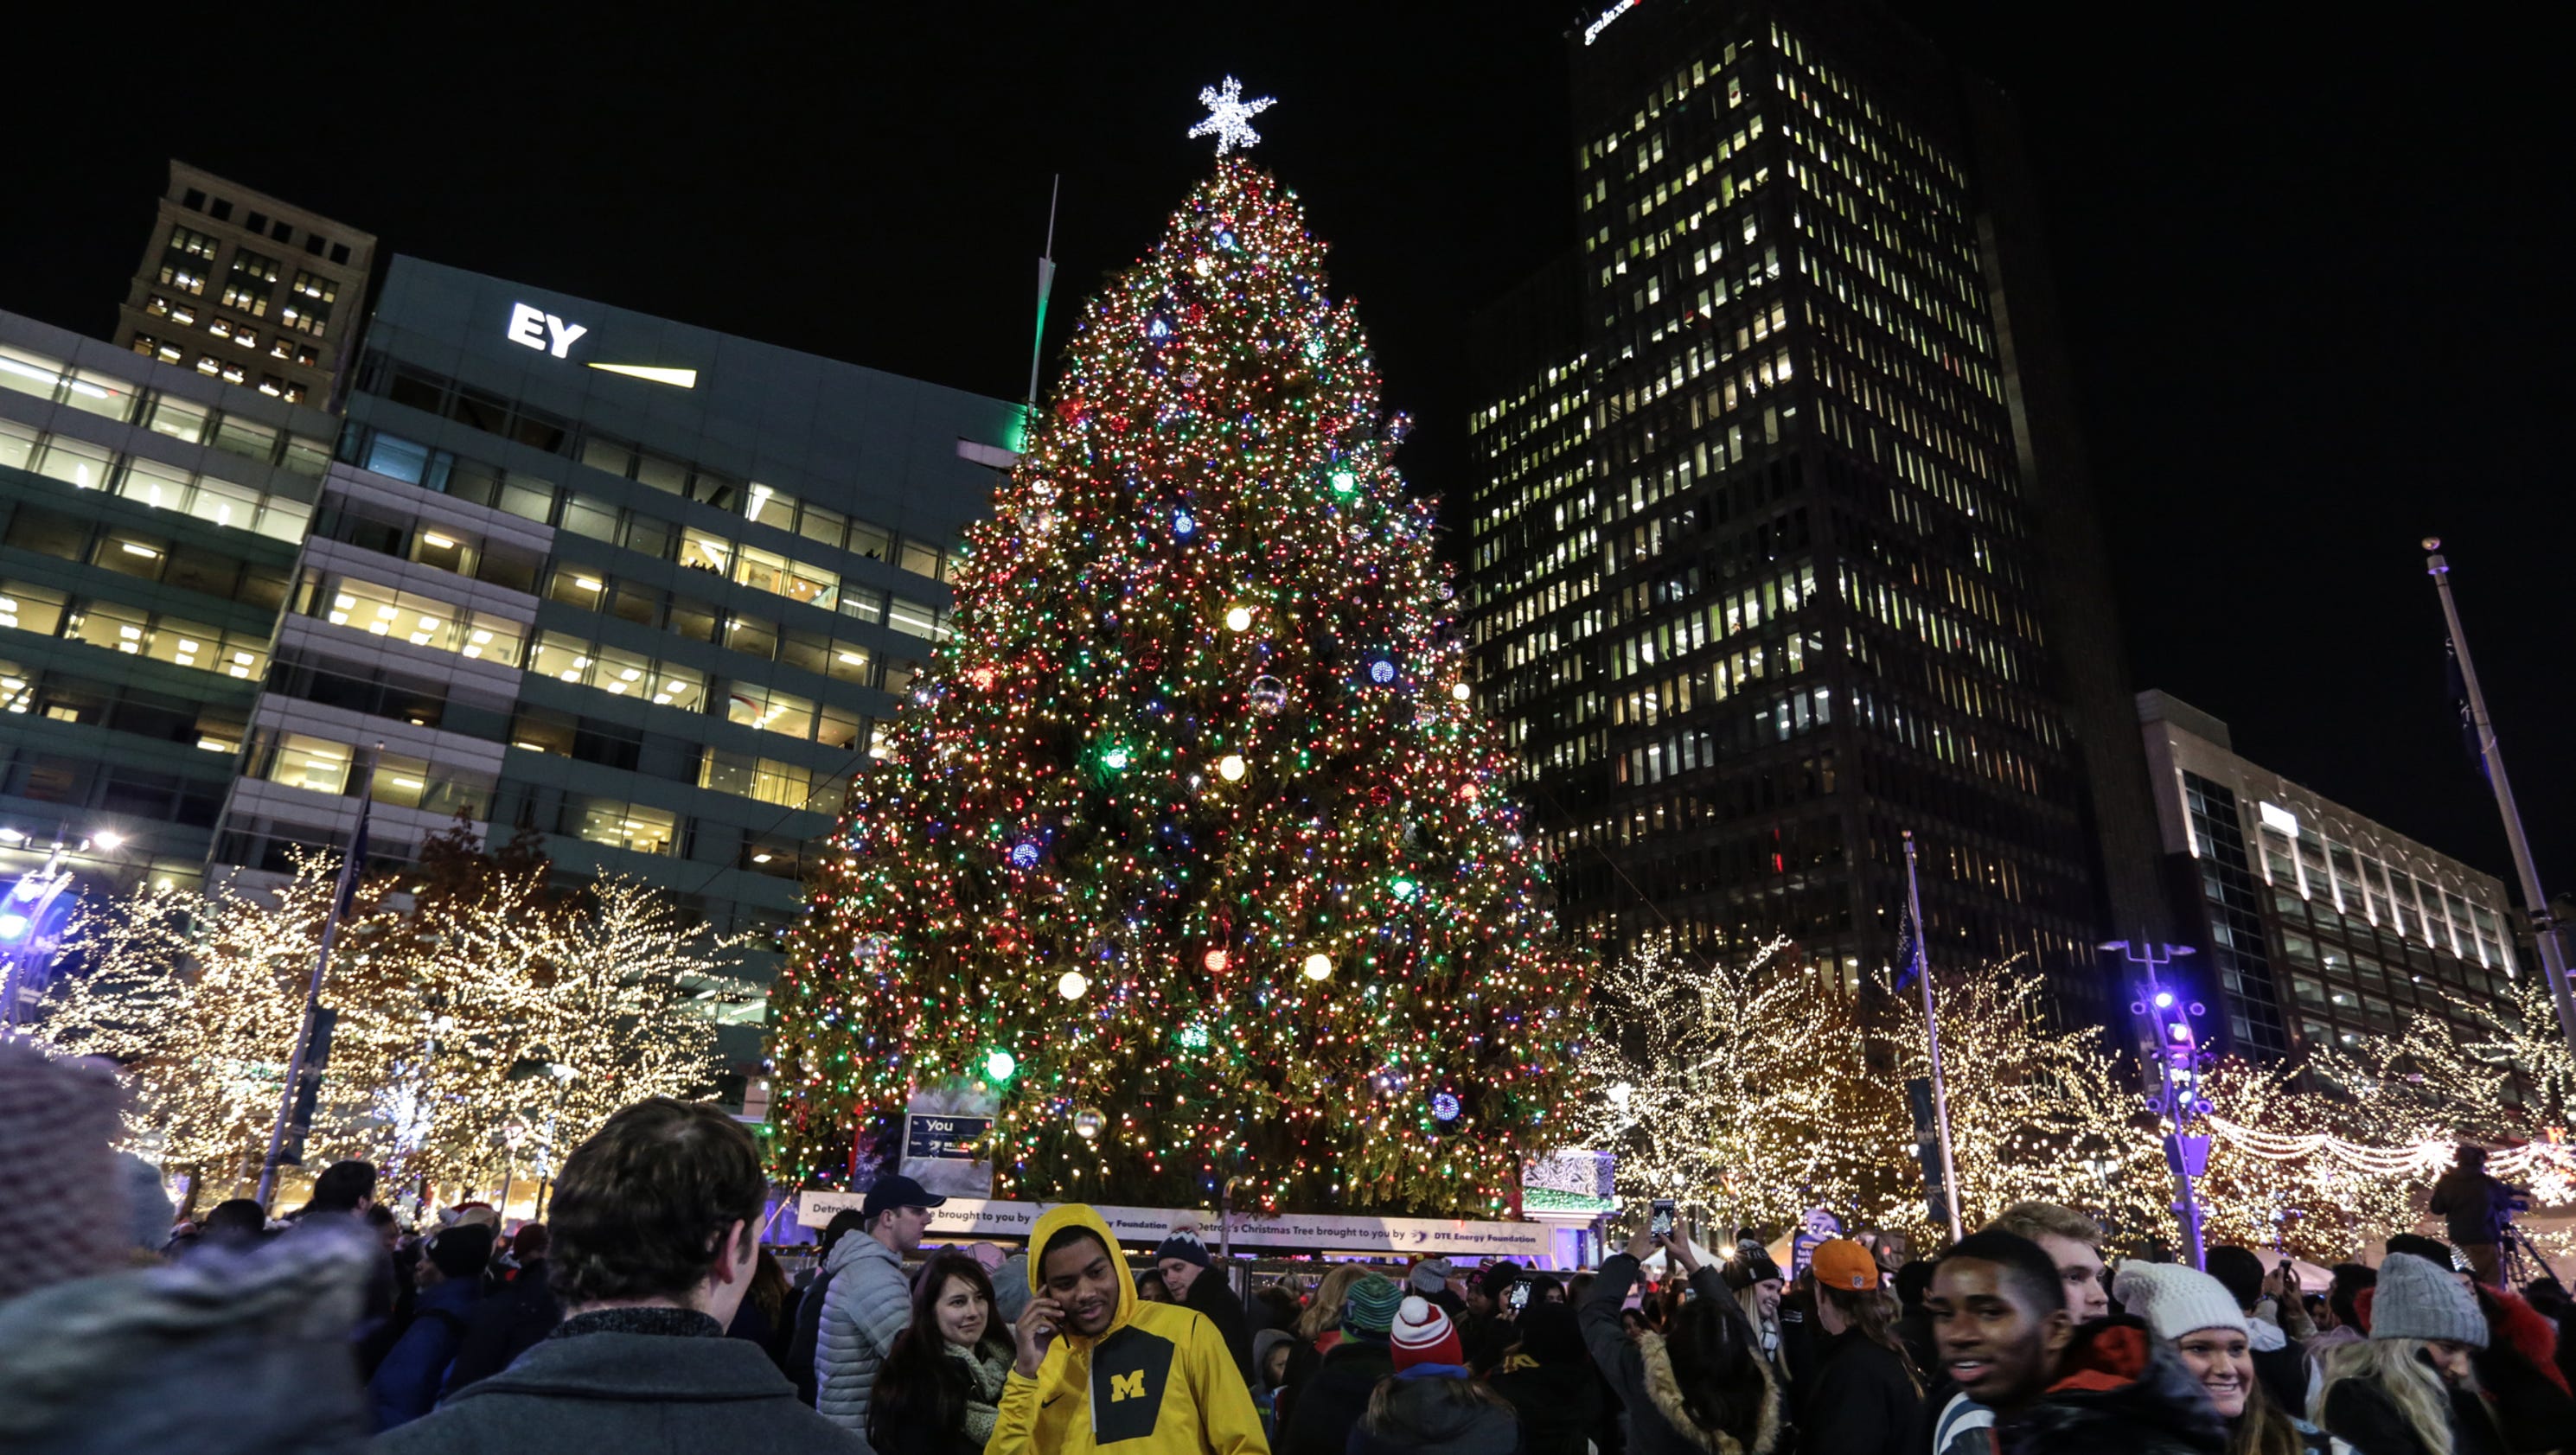 Detroit Christmas tree lights up Campus Martius